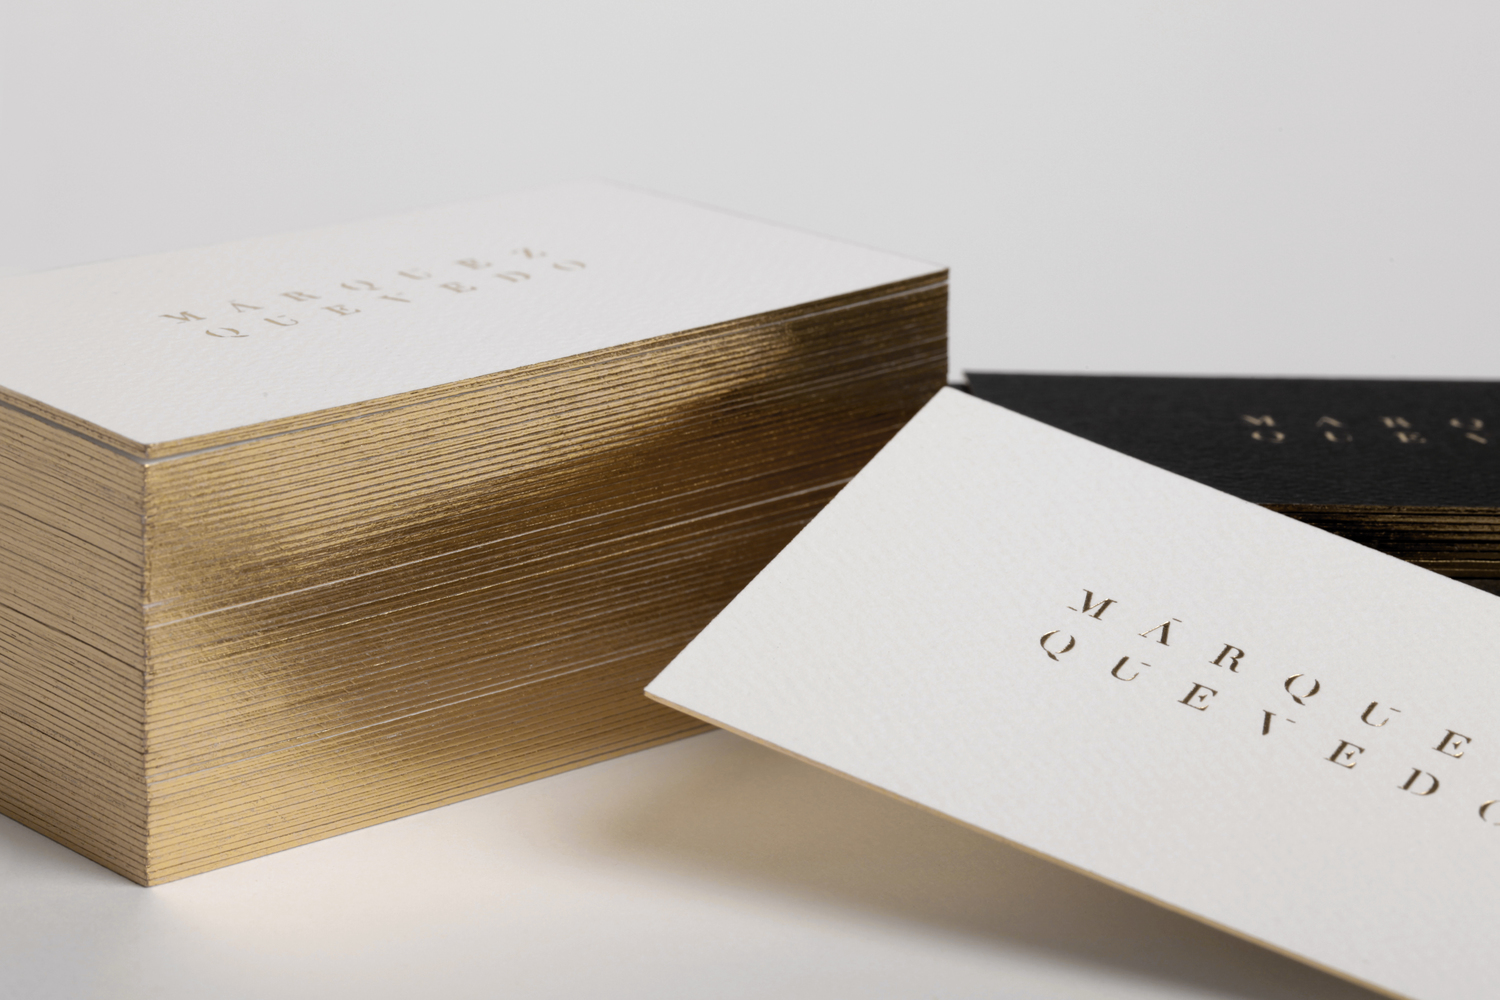 Gold block foiled business cards for architecture studio Marquez Quevedo designed by La Tortillería